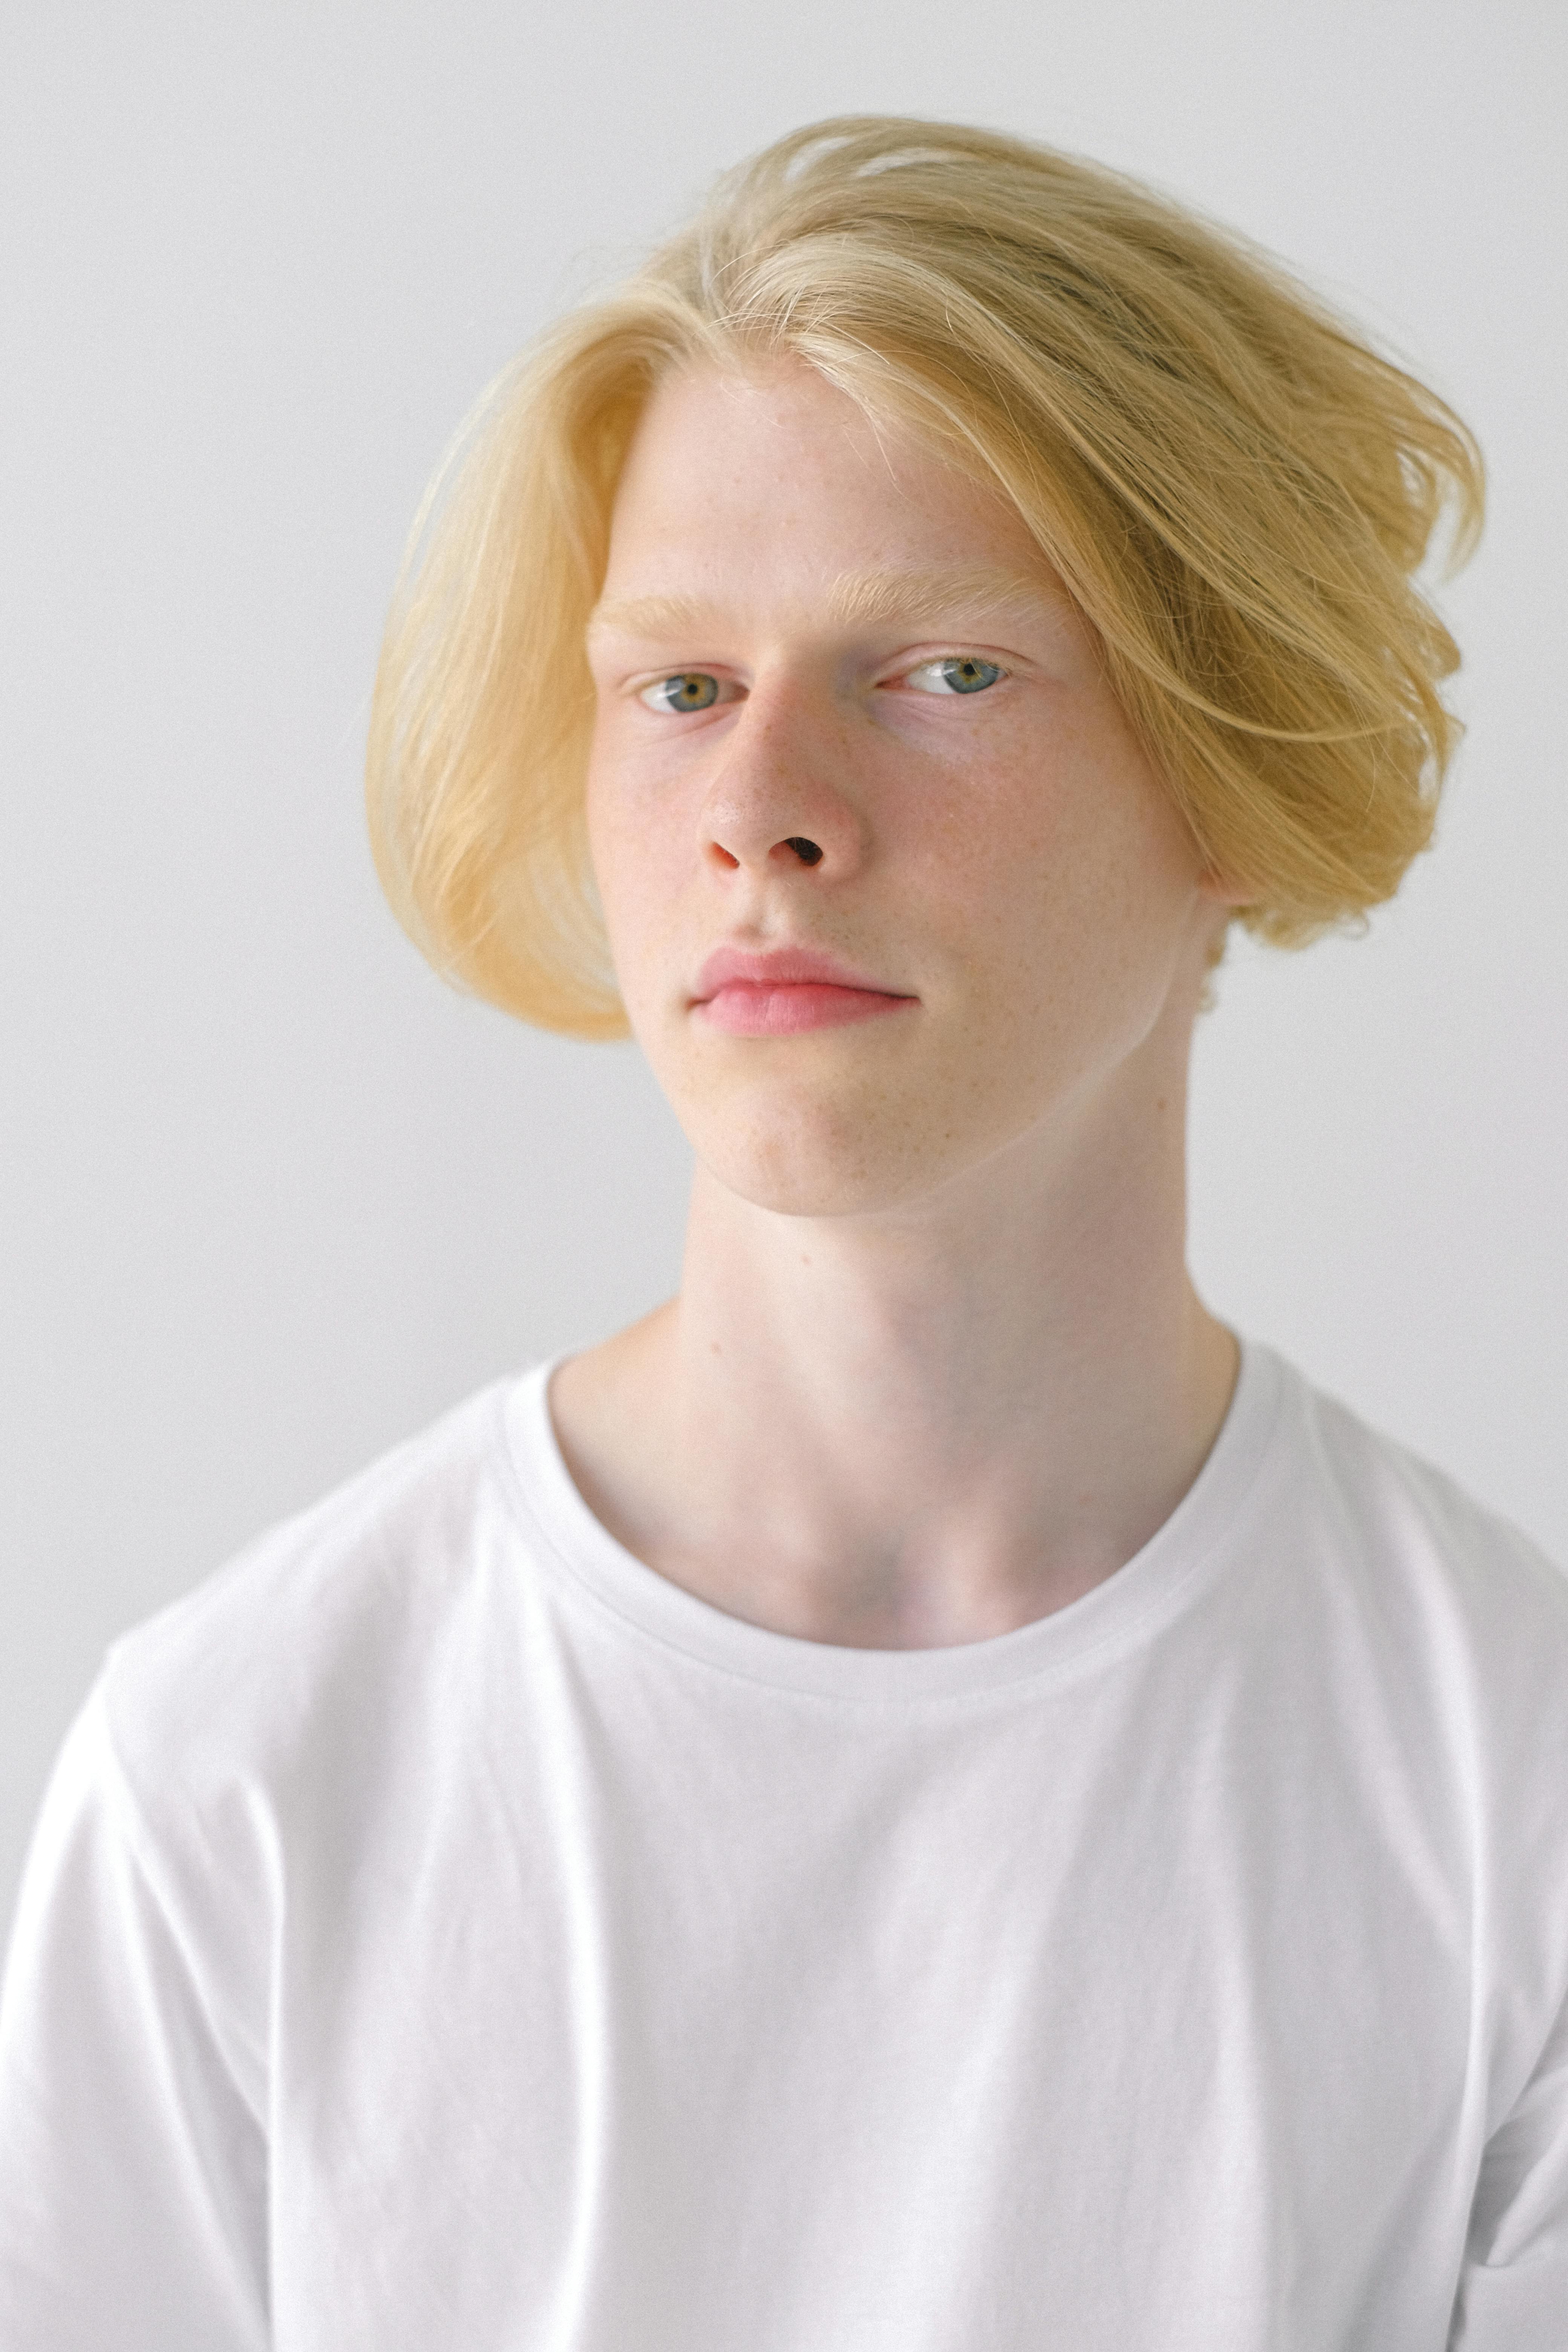 Thoughtful teenage boy with stylish haircut · Free Stock Photo